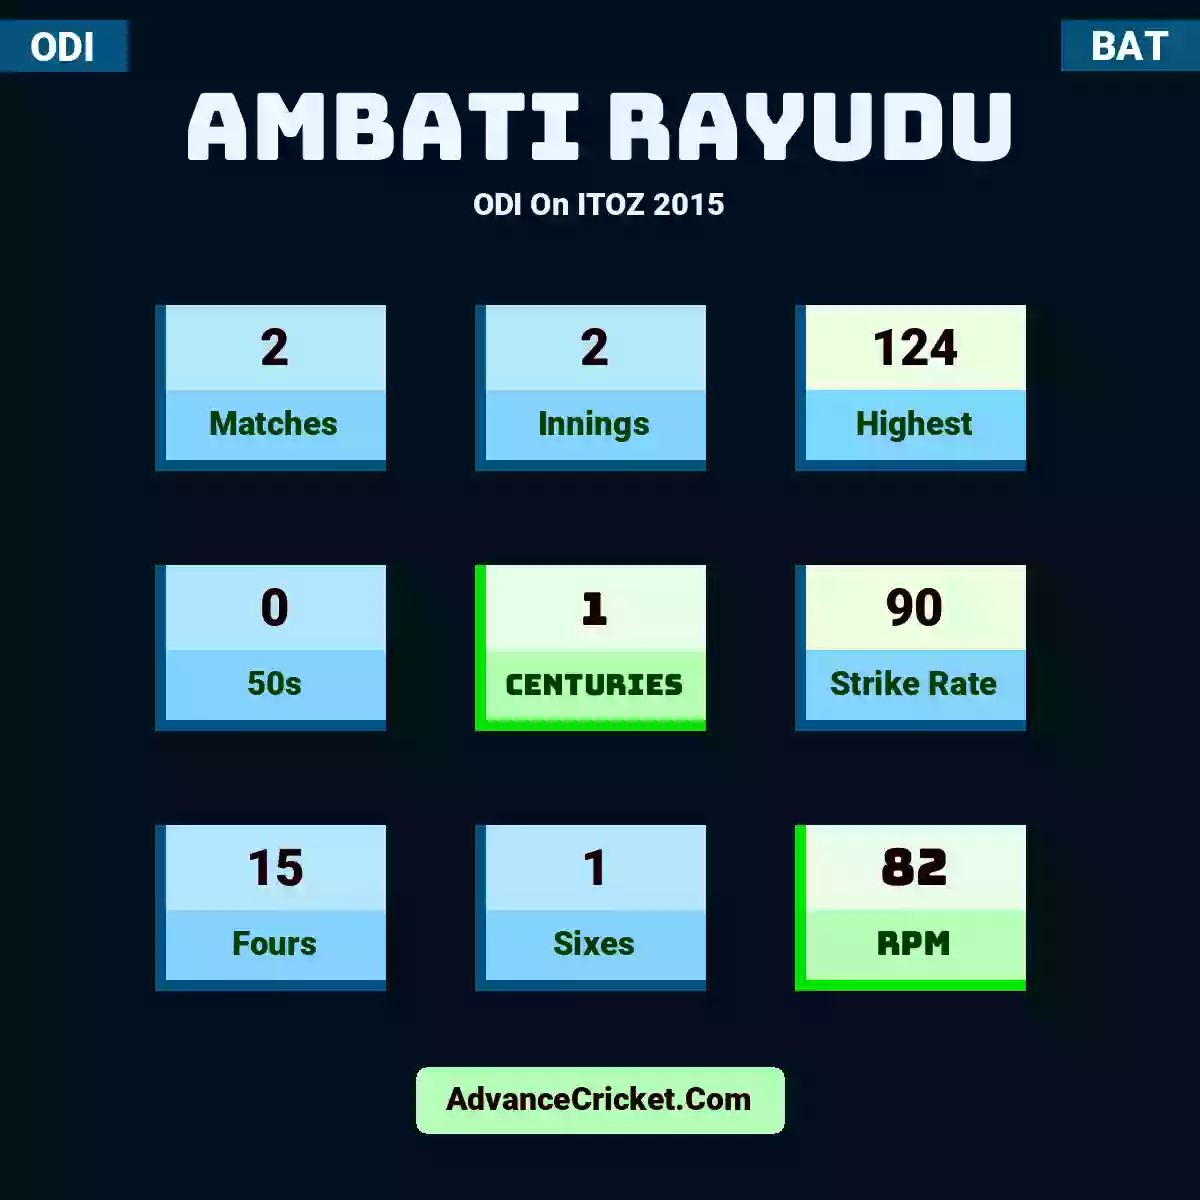 Ambati Rayudu ODI  On ITOZ 2015, Ambati Rayudu played 2 matches, scored 124 runs as highest, 0 half-centuries, and 1 centuries, with a strike rate of 90. A.Rayudu hit 15 fours and 1 sixes, with an RPM of 82.